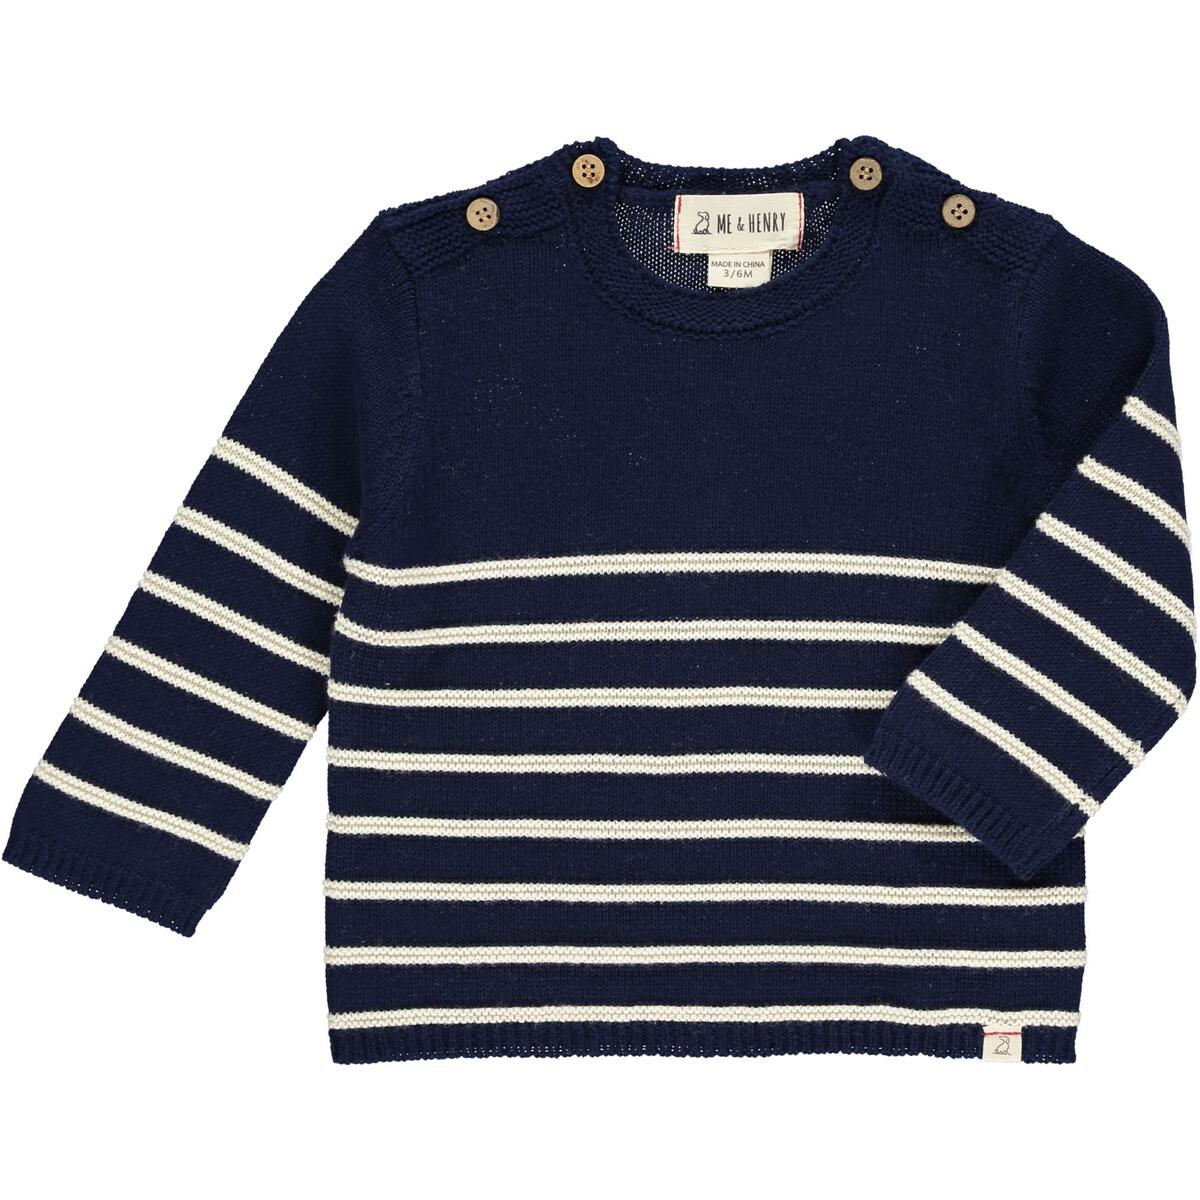 BRETON Baby Sweater, Navy/Cream Stripe